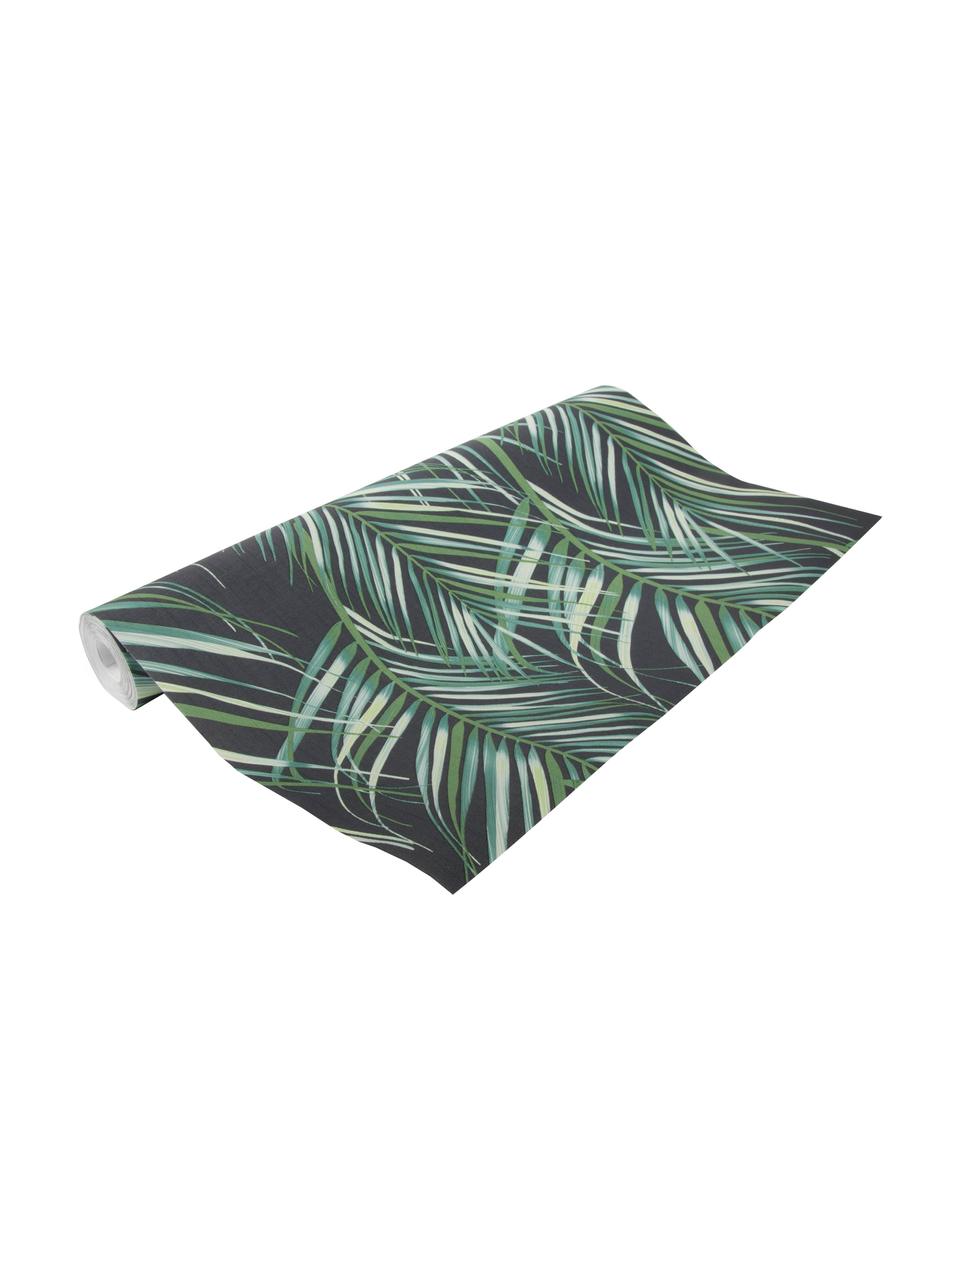 Carta da parati Palm Leaves, Vello, Tonalità verdi, nero, Larg. 52 x Lung. 1005 cm